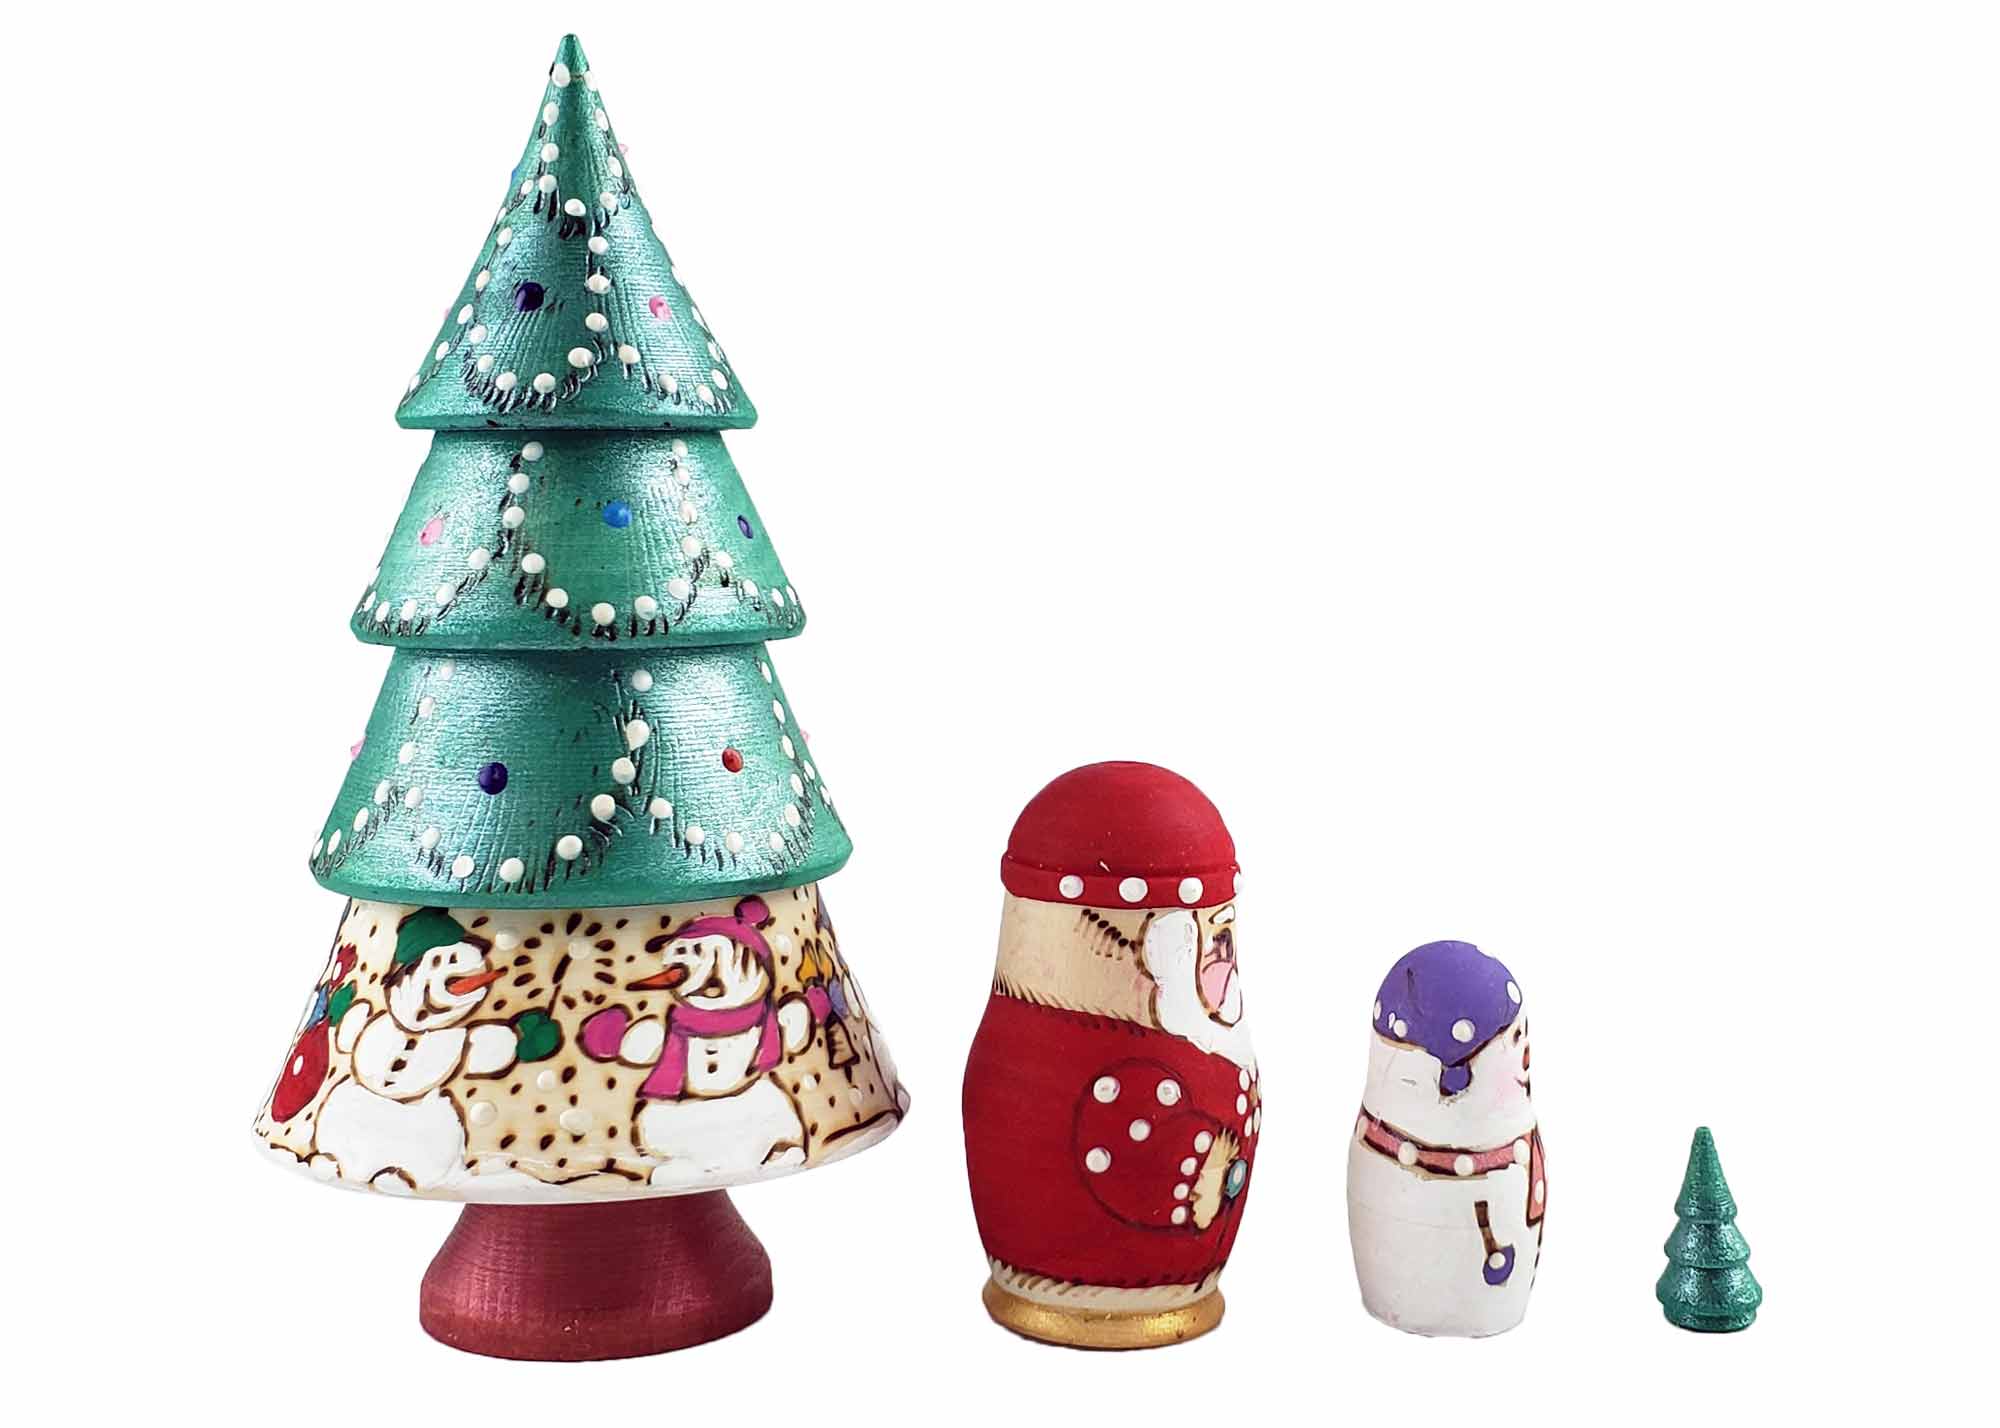 Buy Woodburned Christmas Tree Nesting Doll 4pc./6" at GoldenCockerel.com